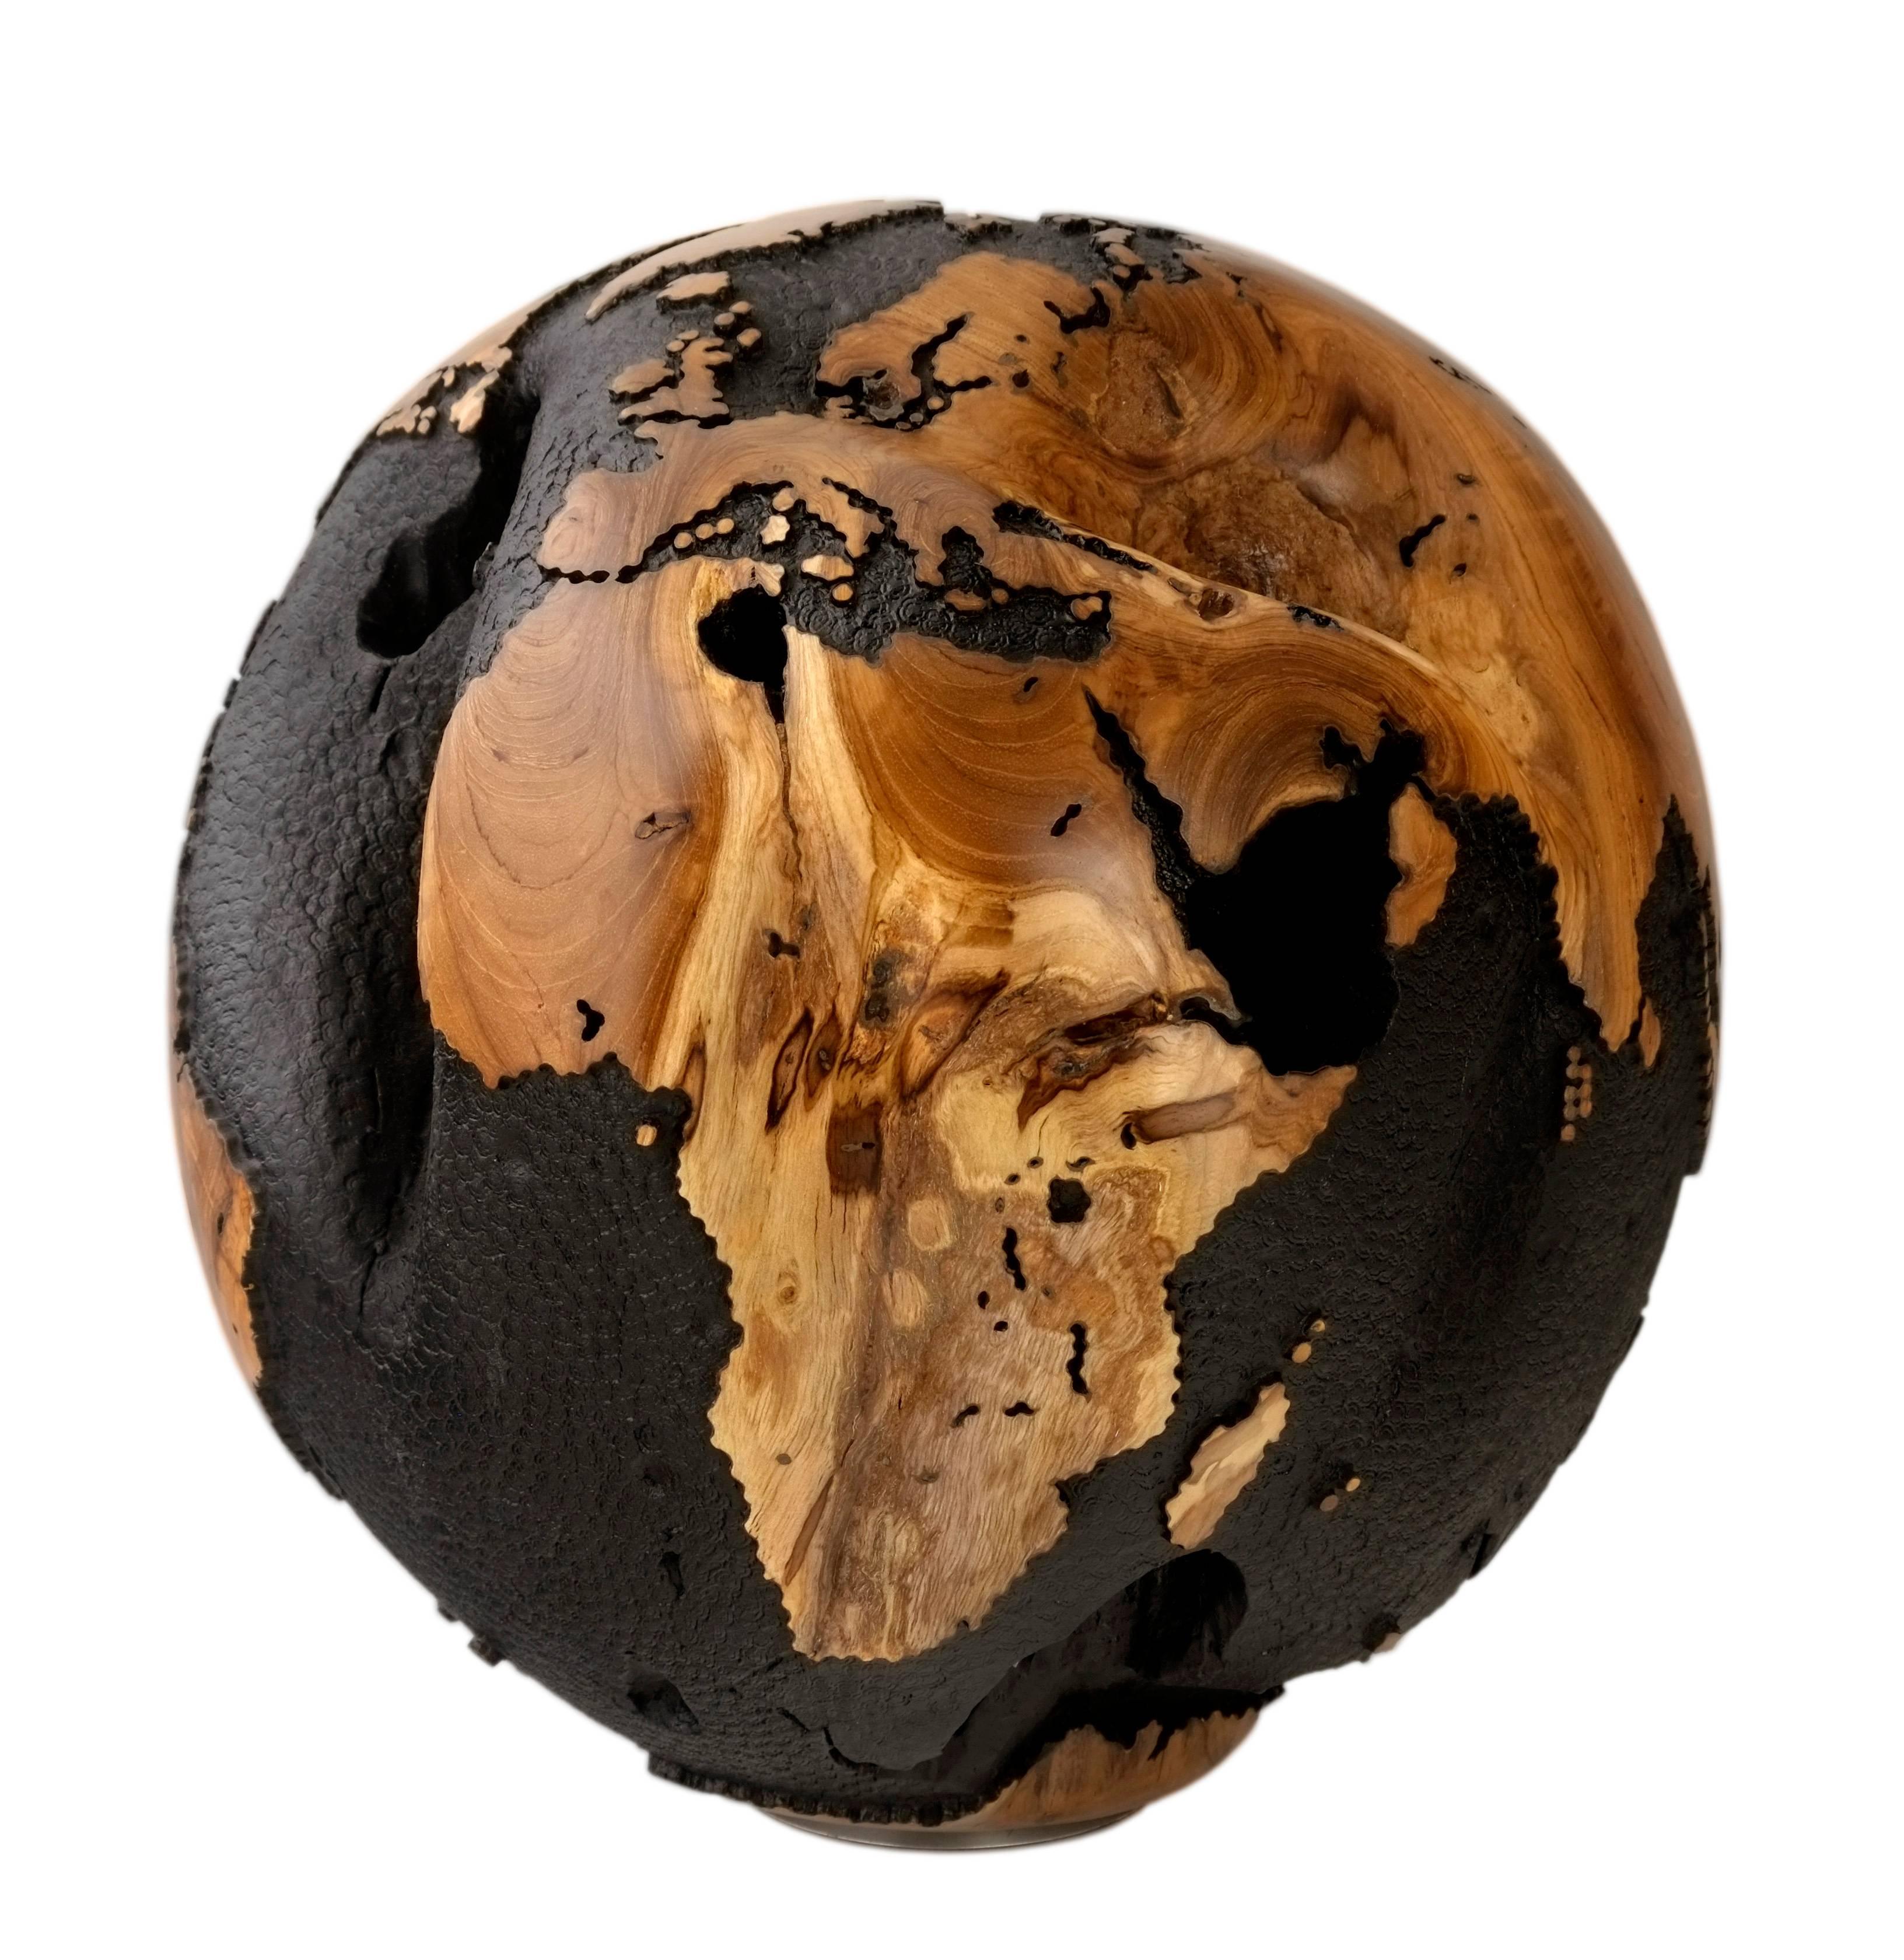 Organic Modern Superb Black, Wooden Globe with Iron Layer, Black Paint, Hammered Finish, 30 cm